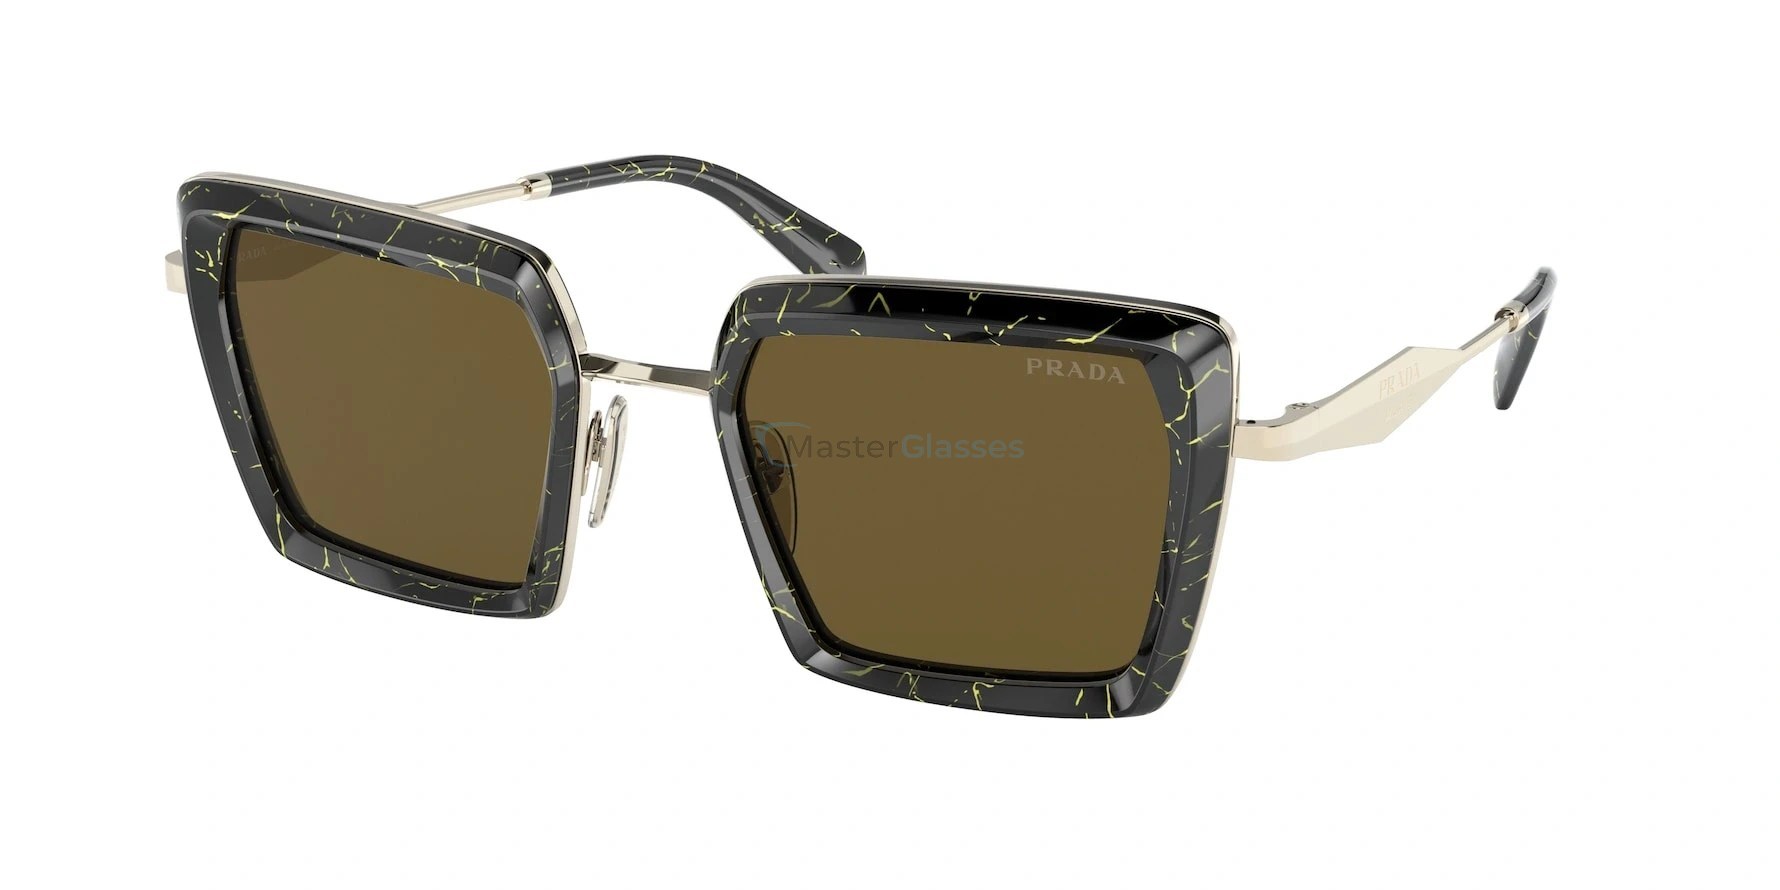 Zs 19 1. Prada Sunglasses PR-02ws-07c0d1-54. Prada™ PR 19zs 1ab5s0 55 - Black. Prada women's White Oval Sunglasses SKU: PR-20zs-1425s0    UPC: 8056597781312. 90 Pr55/051.